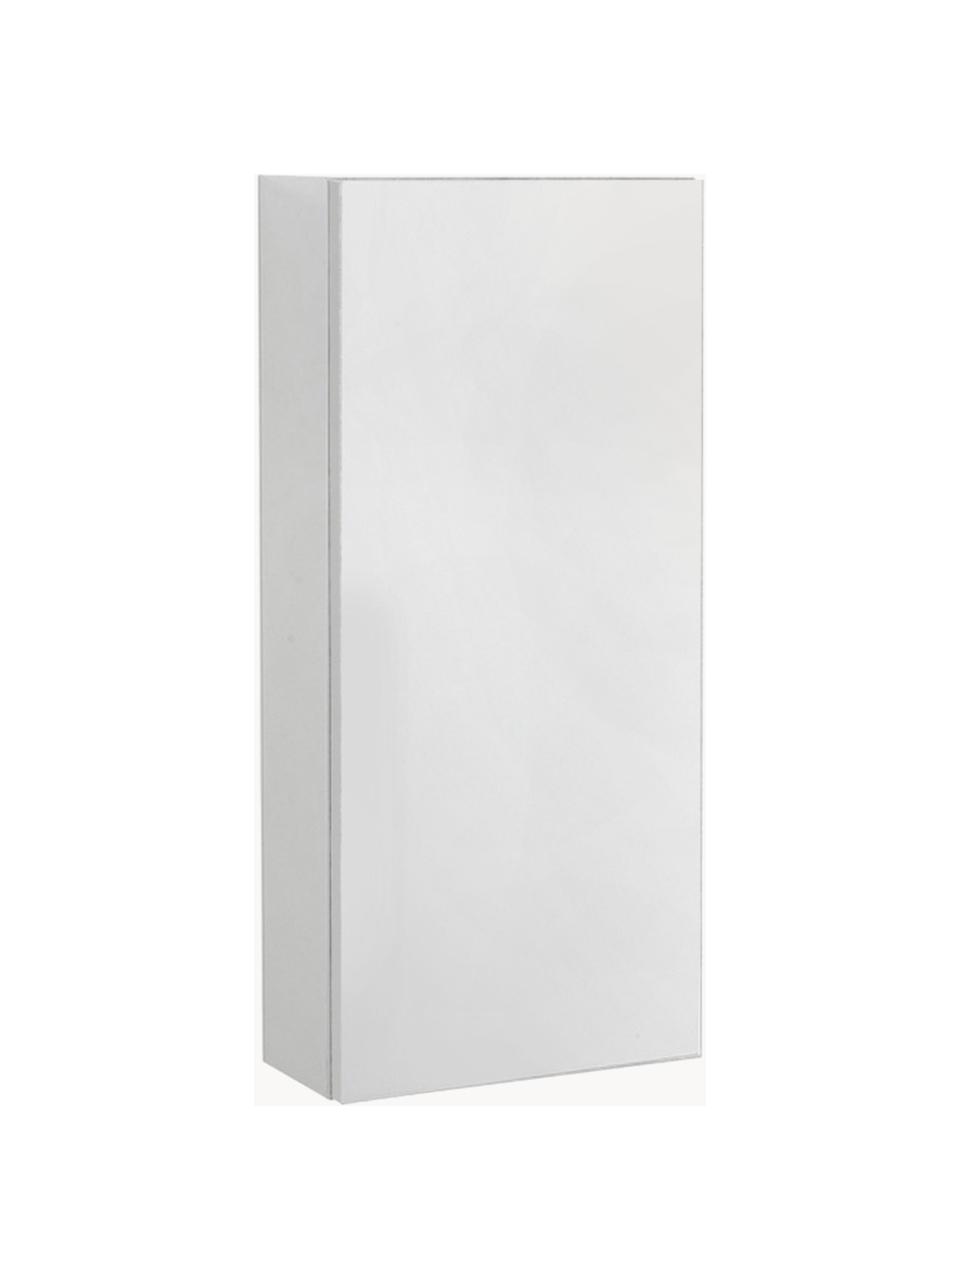 Vysoká koupelnová skříňka Yoka, Š 35 cm, Bílá, Š 35 cm, V 78 cm